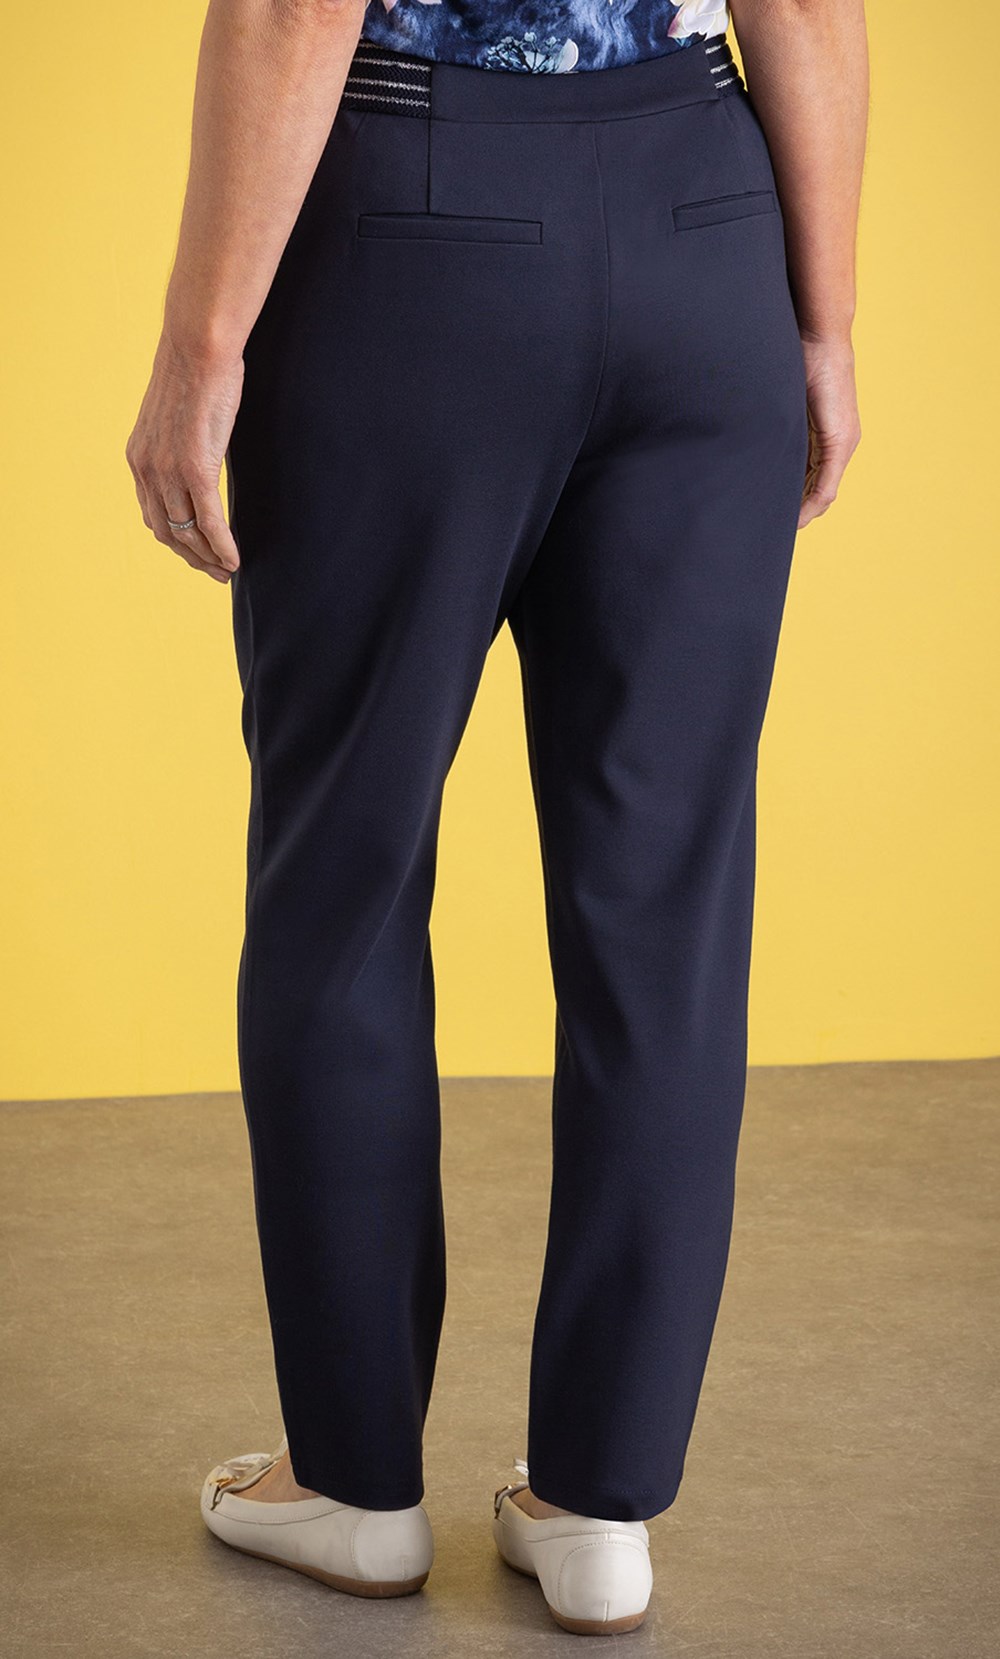 Buy Men's Navy Waterproof Formal Pants Online In India